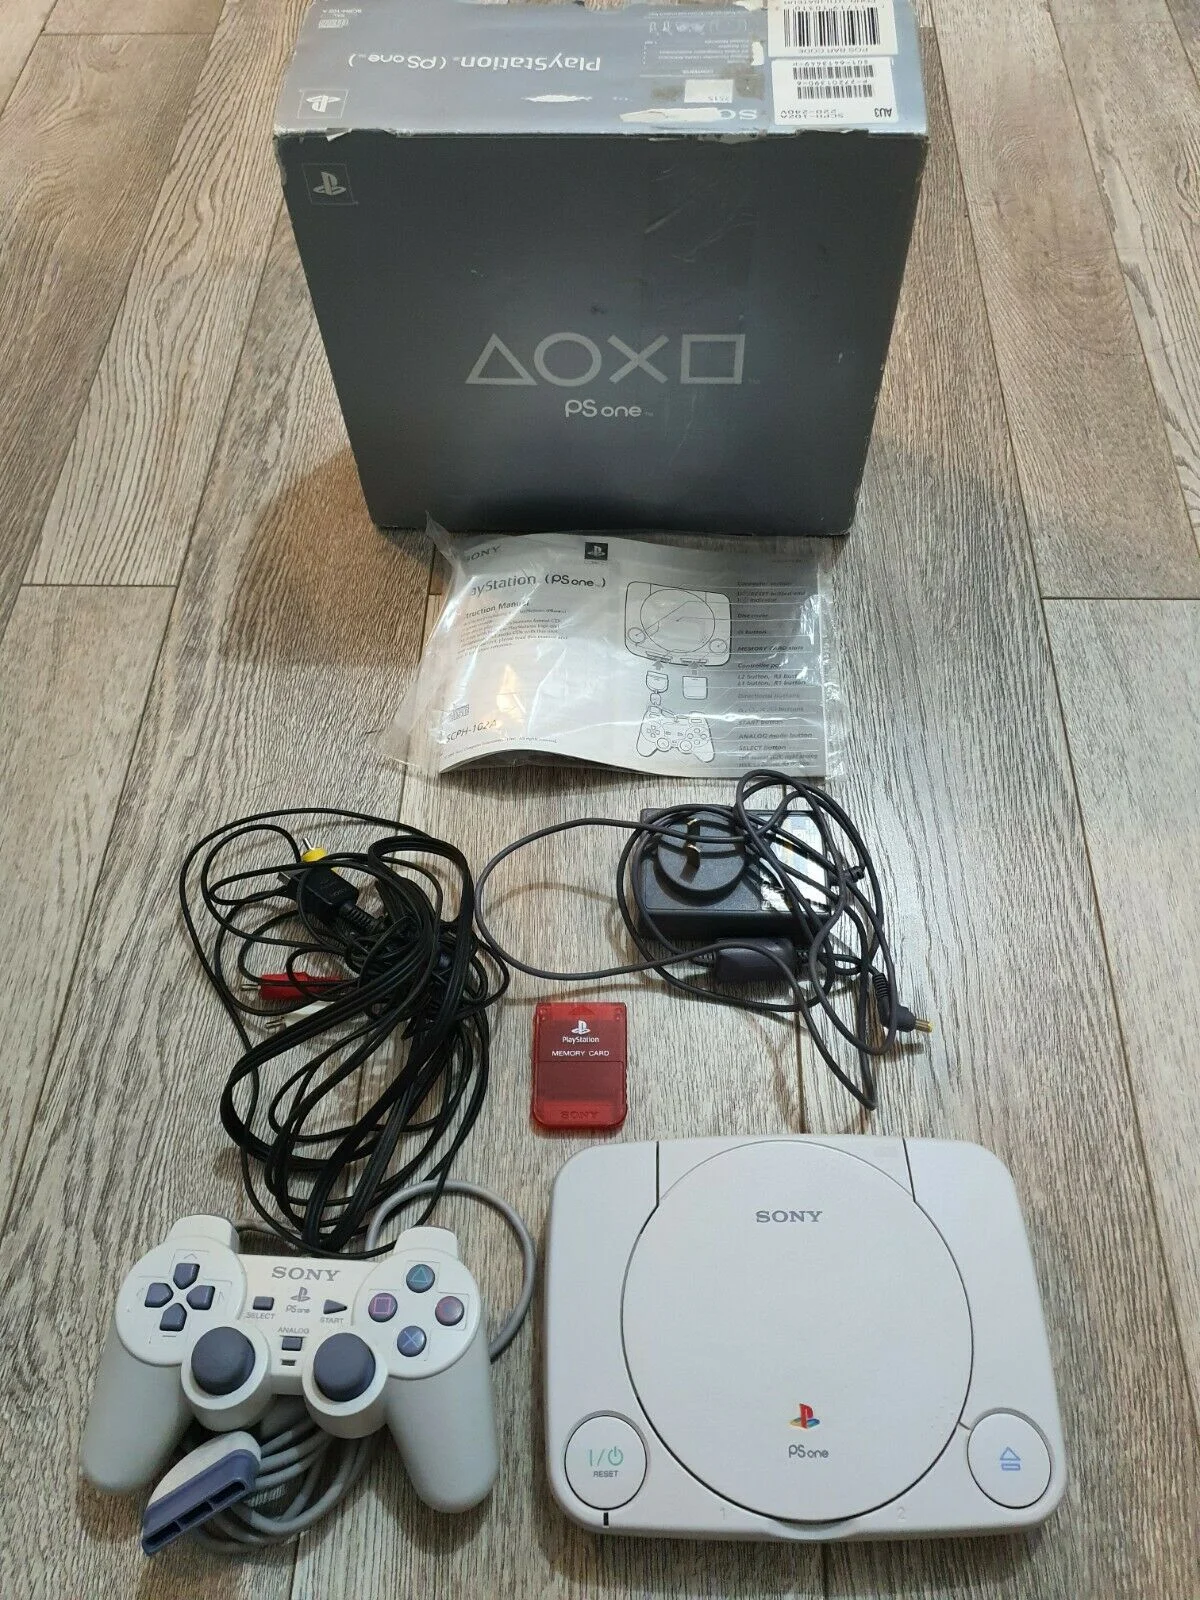  Sony PSone Console [AU]